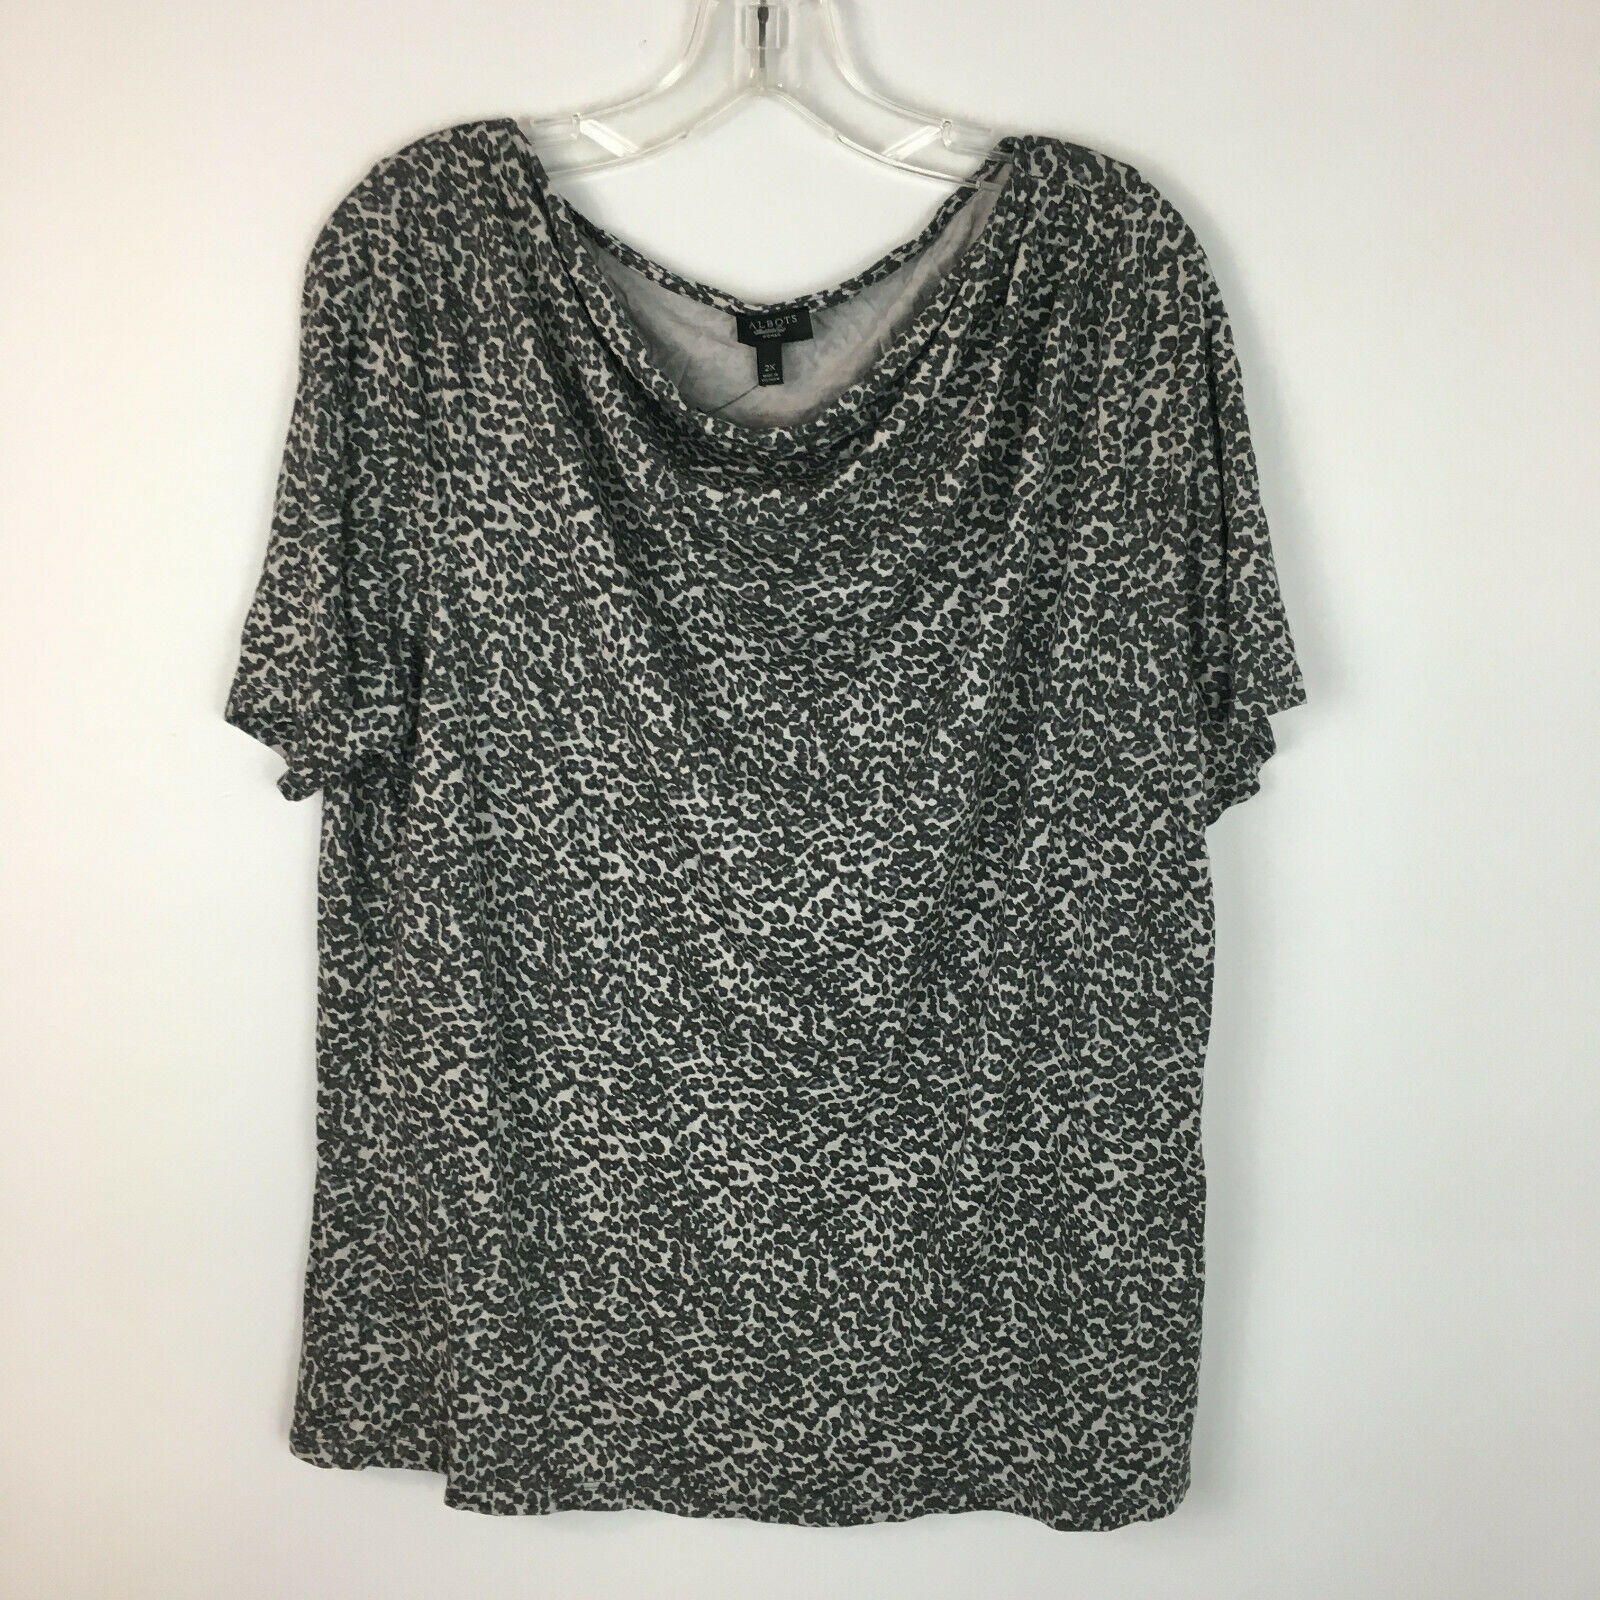 Talbots Women's Cheetah Print Scoopneck Gray Blouse Shirt Plus Size 2X ...